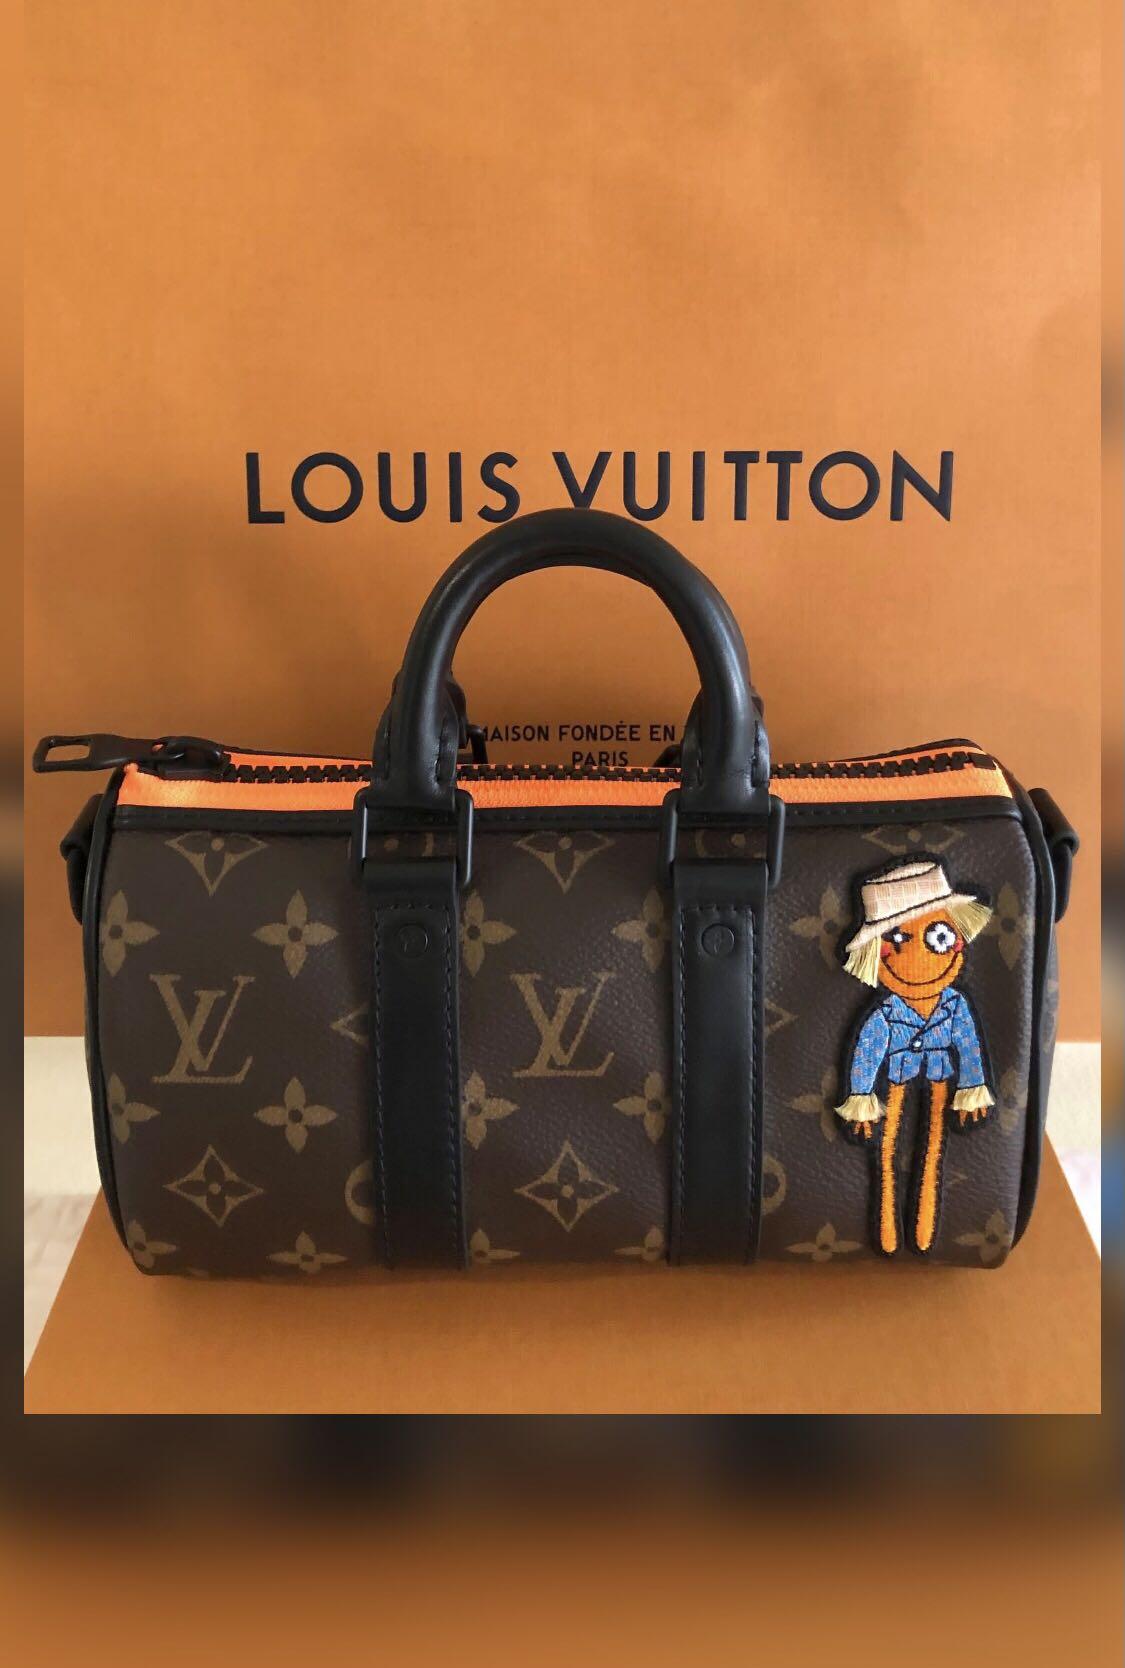 Shop Louis Vuitton Keepall 2022 SS Keepall xs (M81003, M81004) by SkyNS